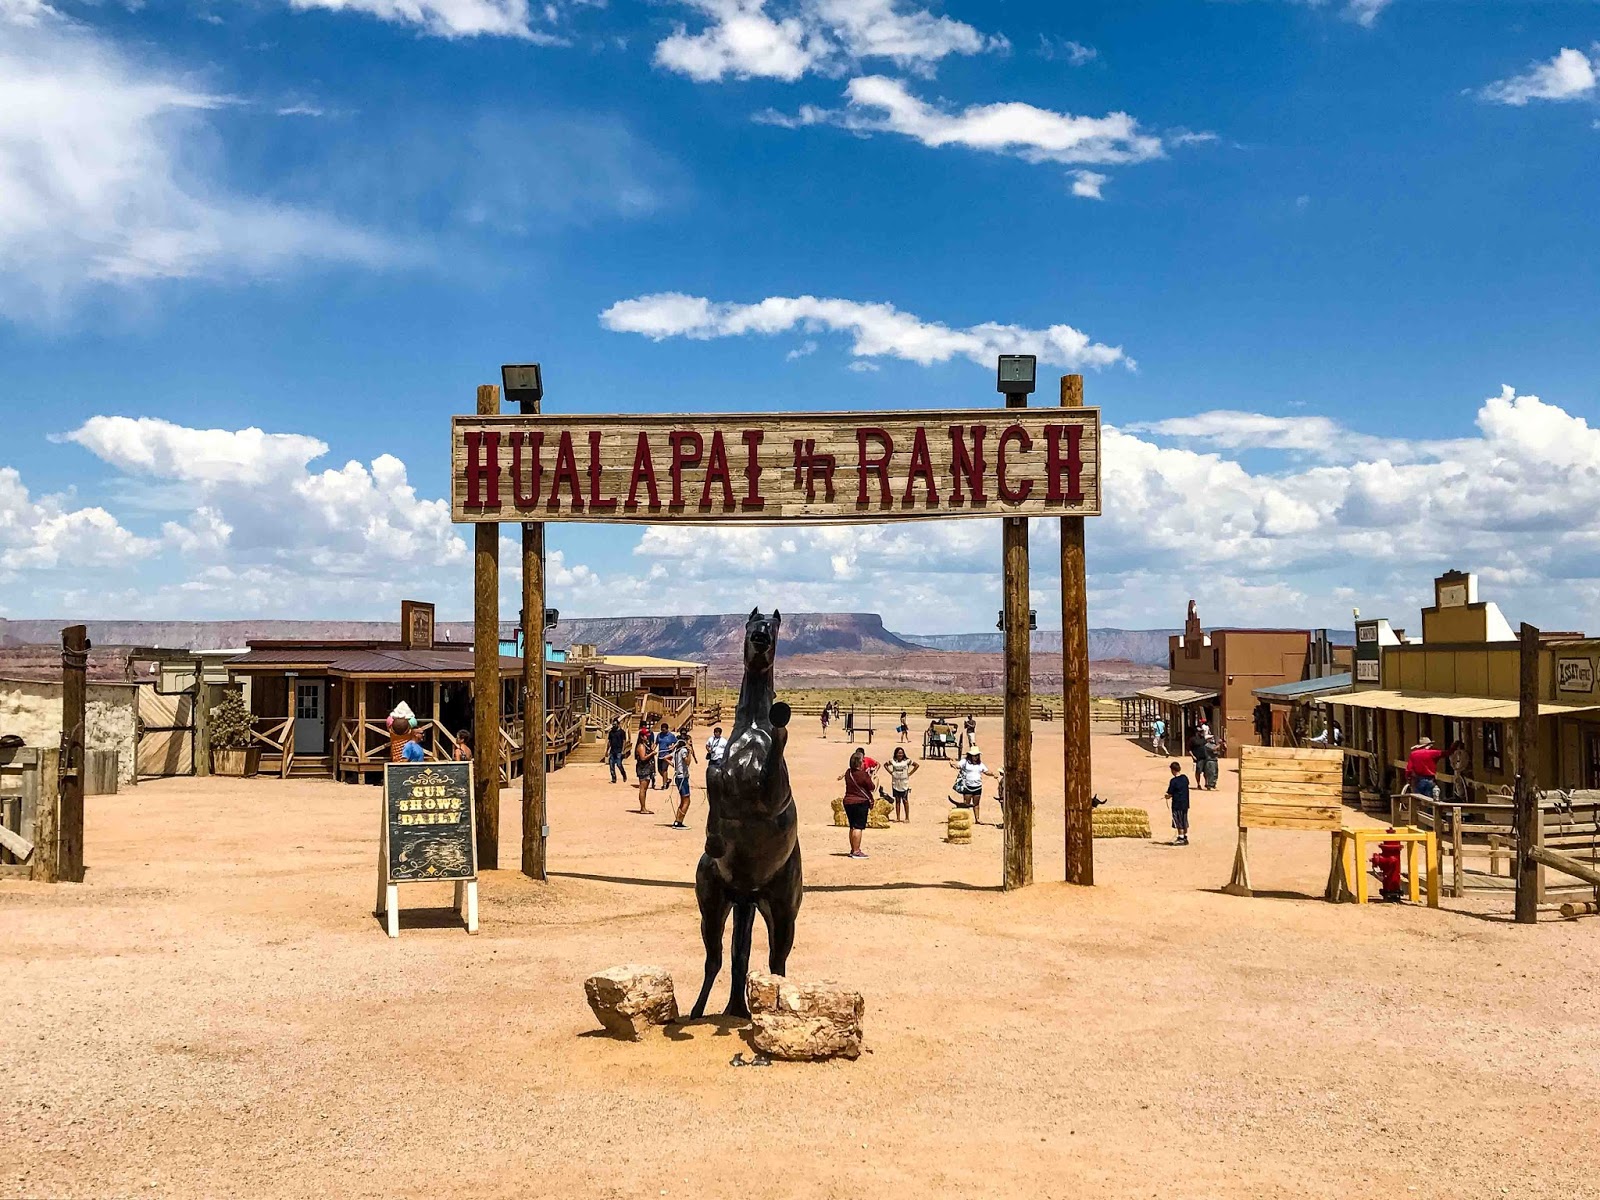 Hualapai Ranch - Hualapai Village at Grand Canyon West - Christianson Tours